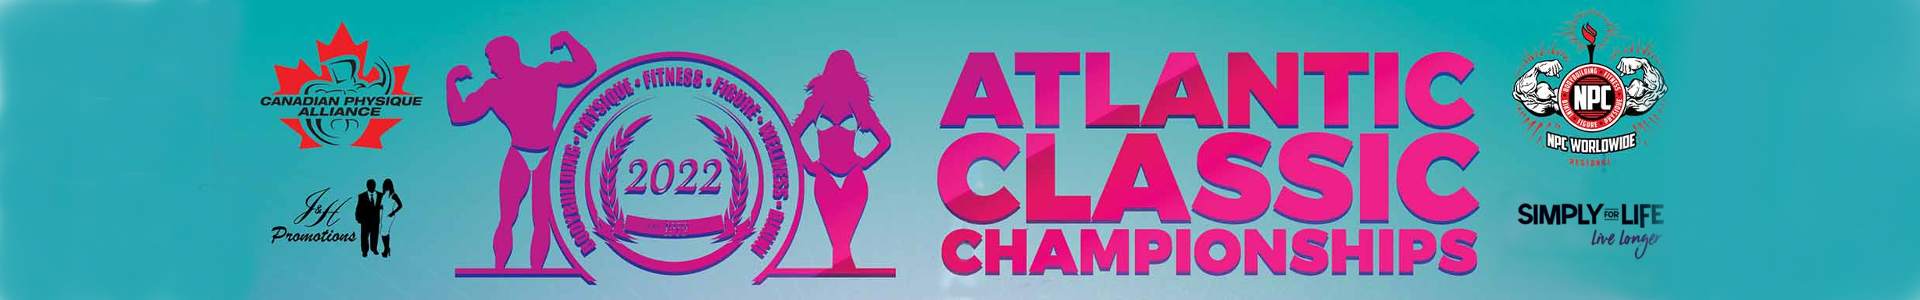 Atlantic Classic Championships